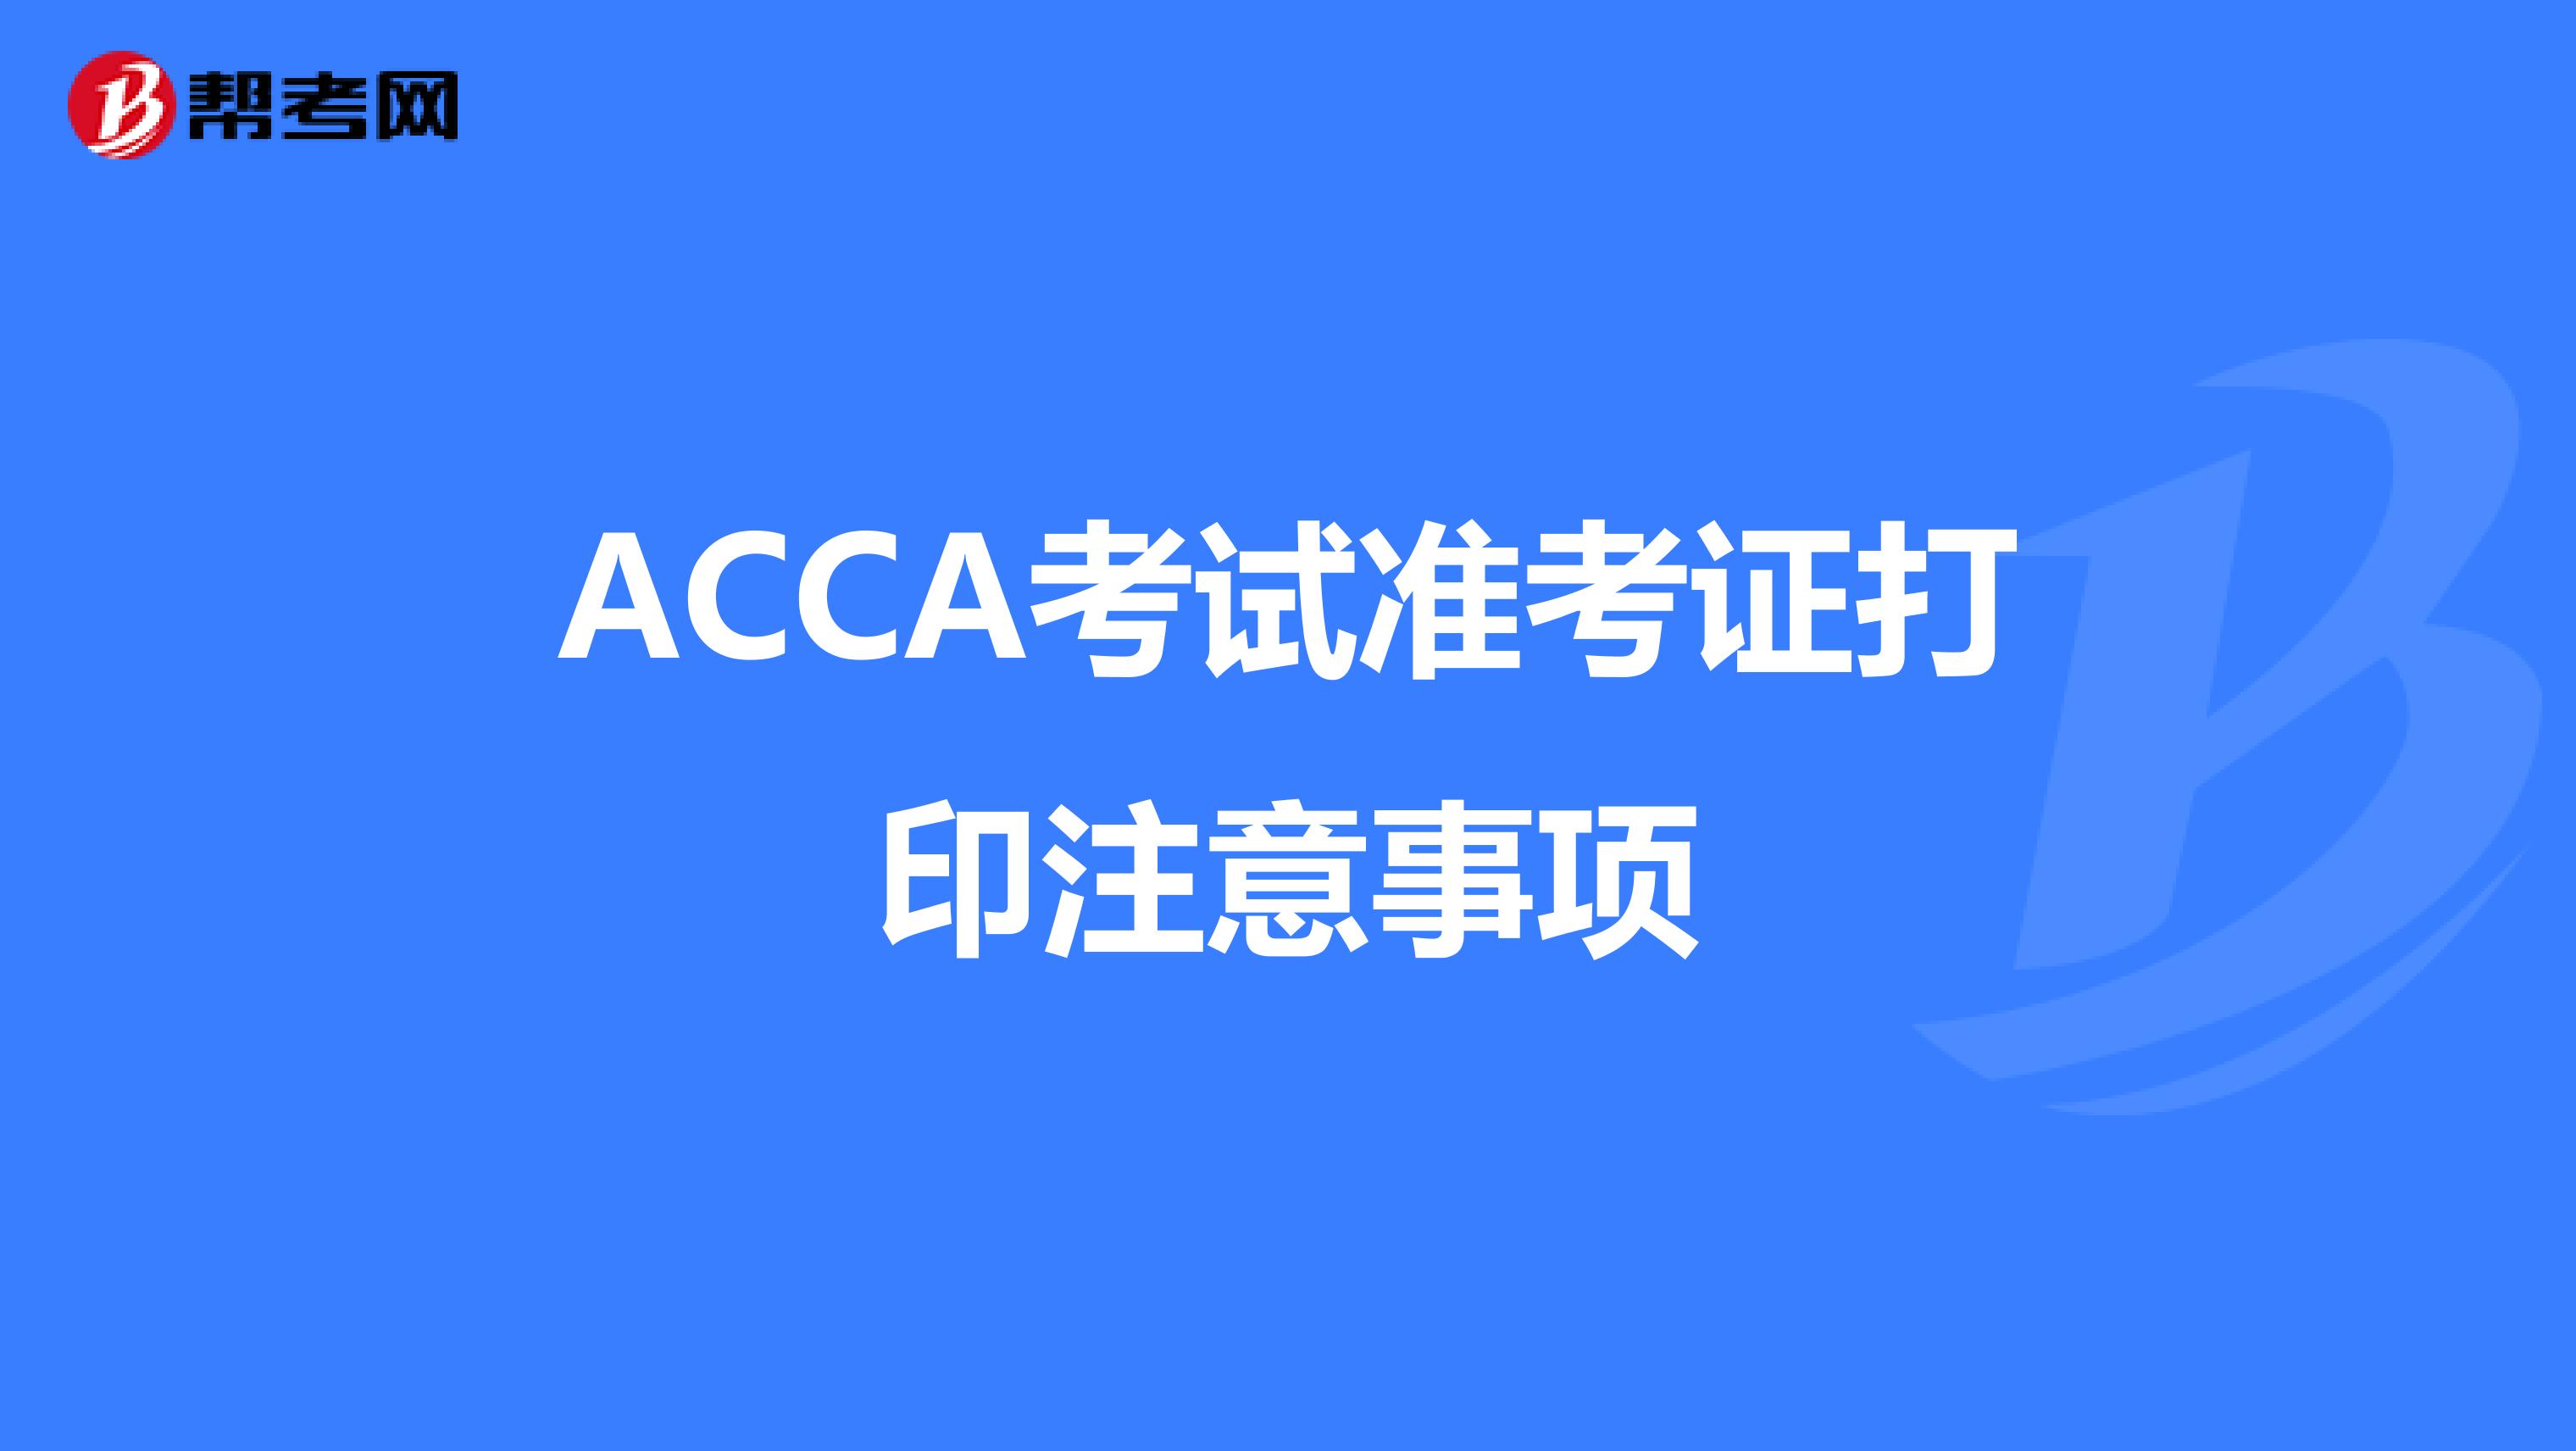 ACCA考试准考证打印注意事项